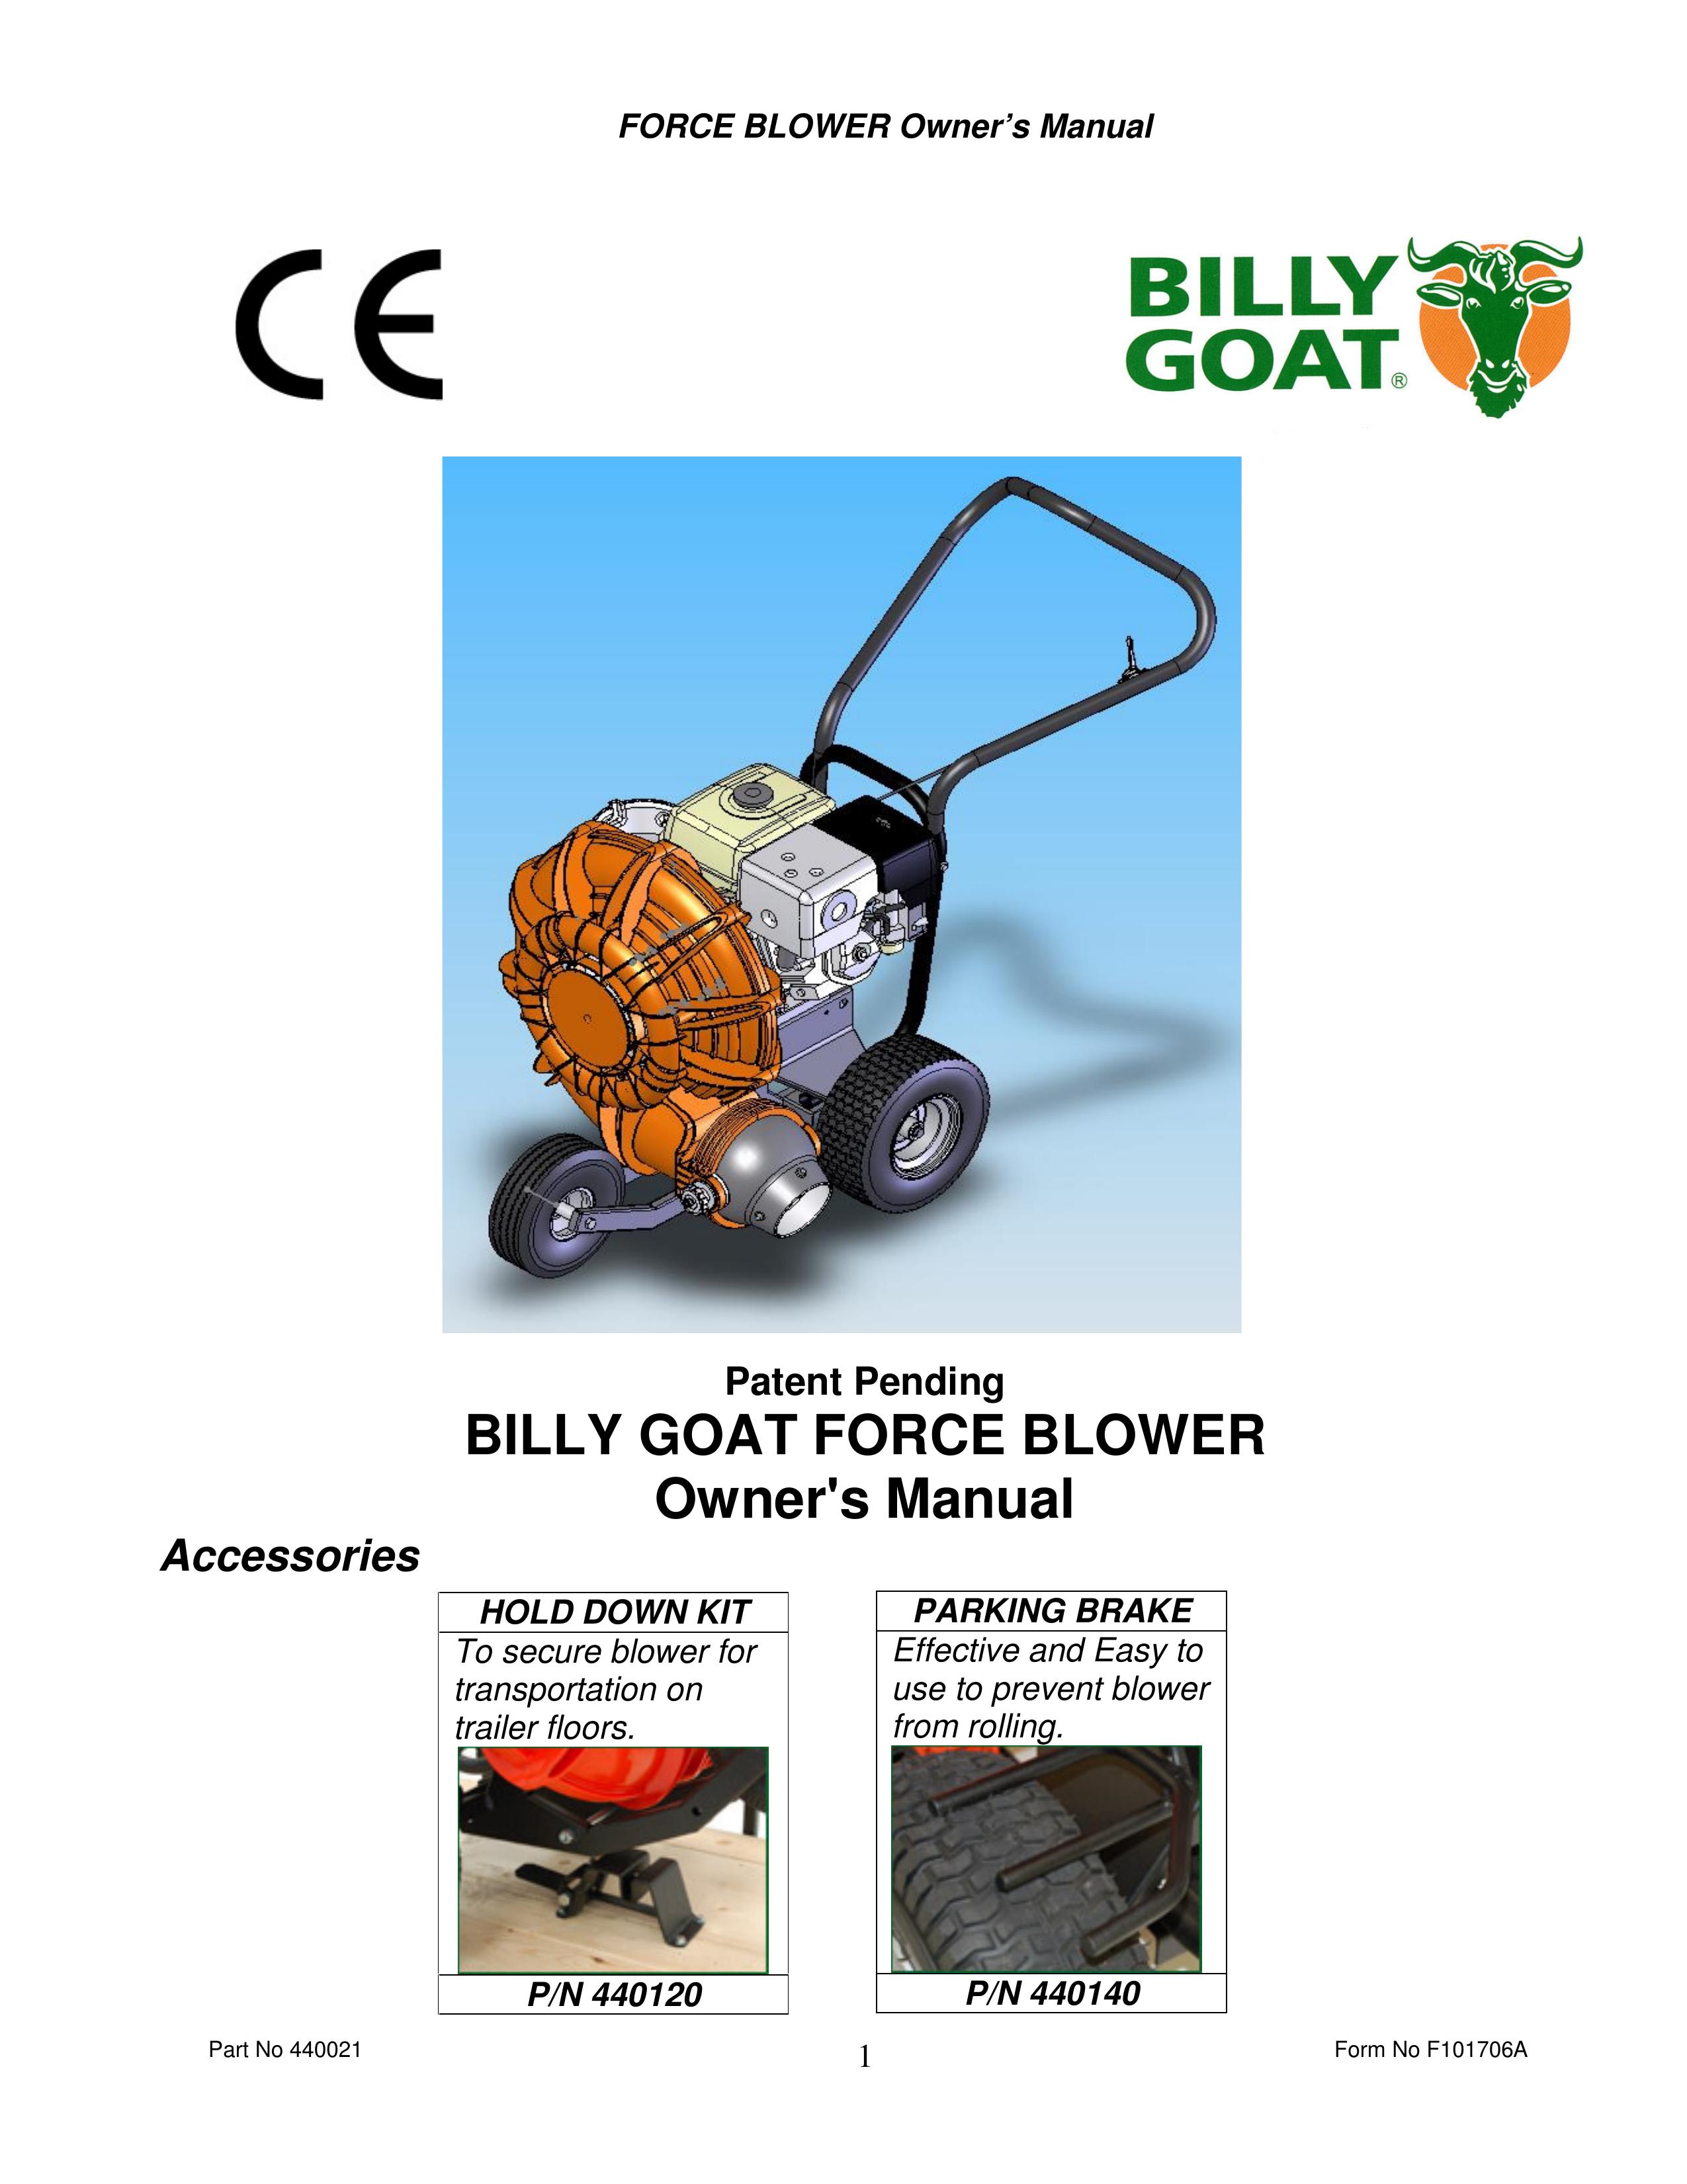 Billy Goat P / N 440140 Blower User Manual